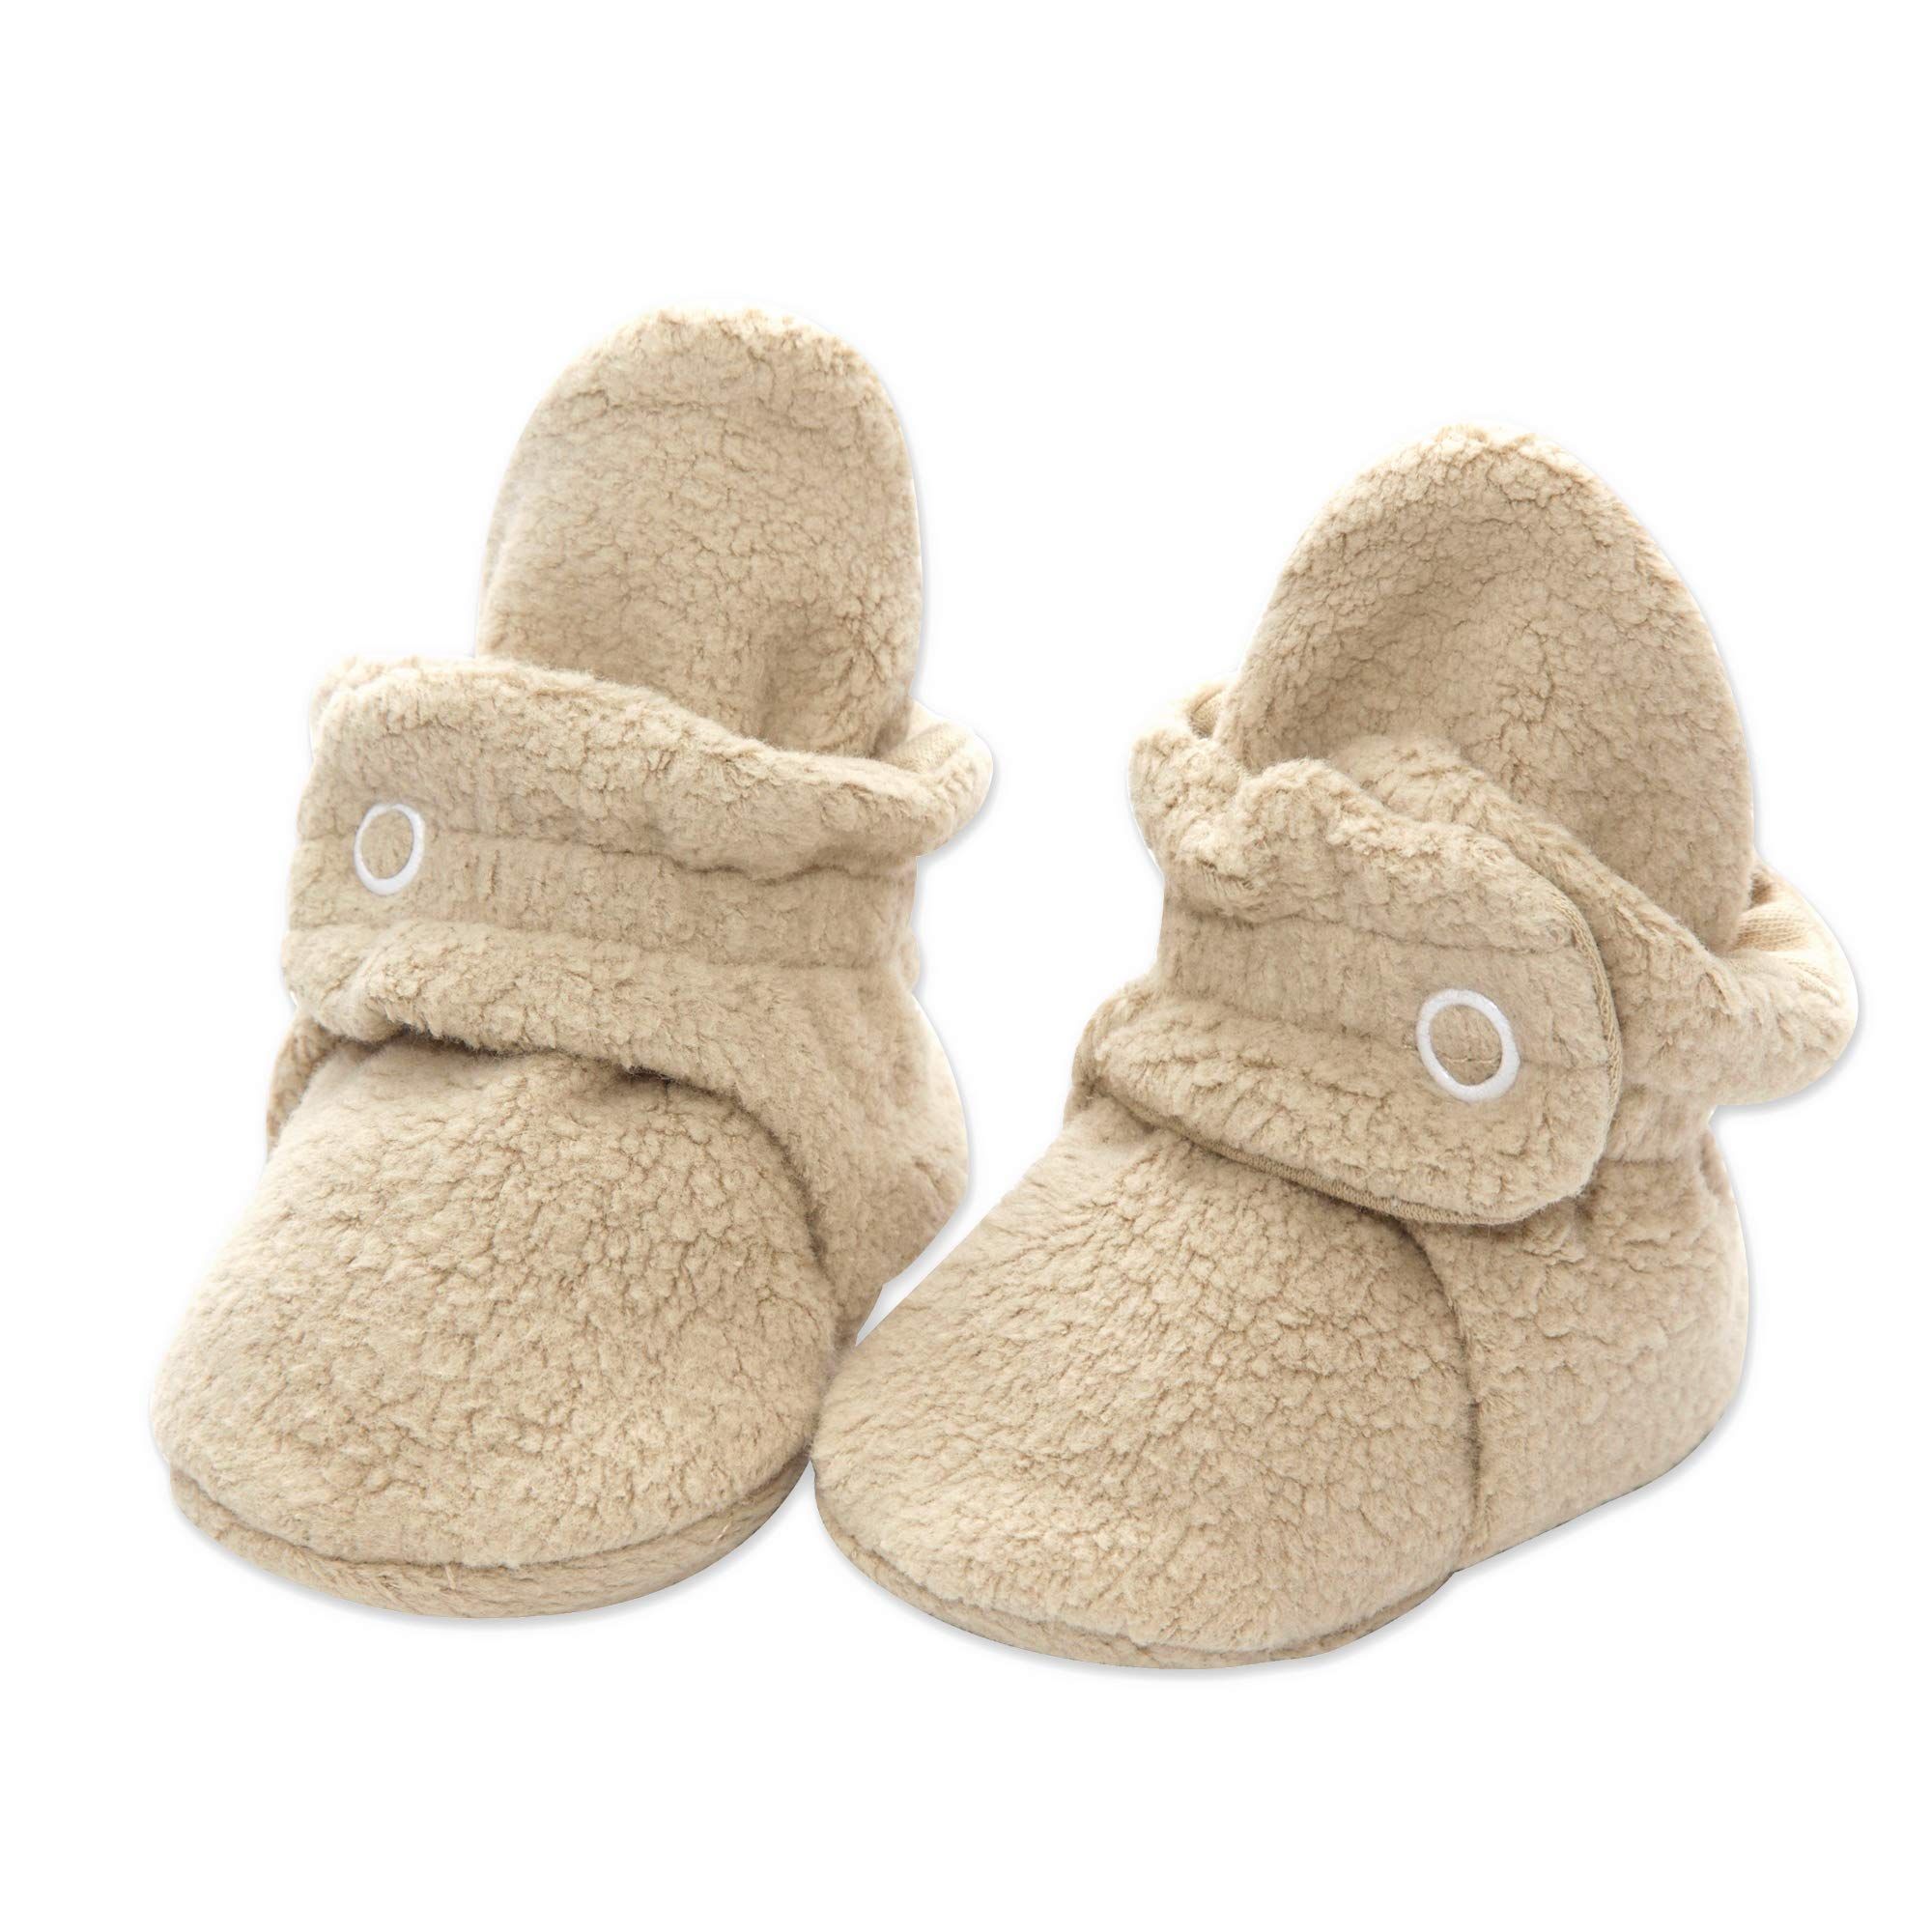 Zutano Cozie Fleece Baby Booties, Unisex, For Newborns and Infants | Amazon (US)